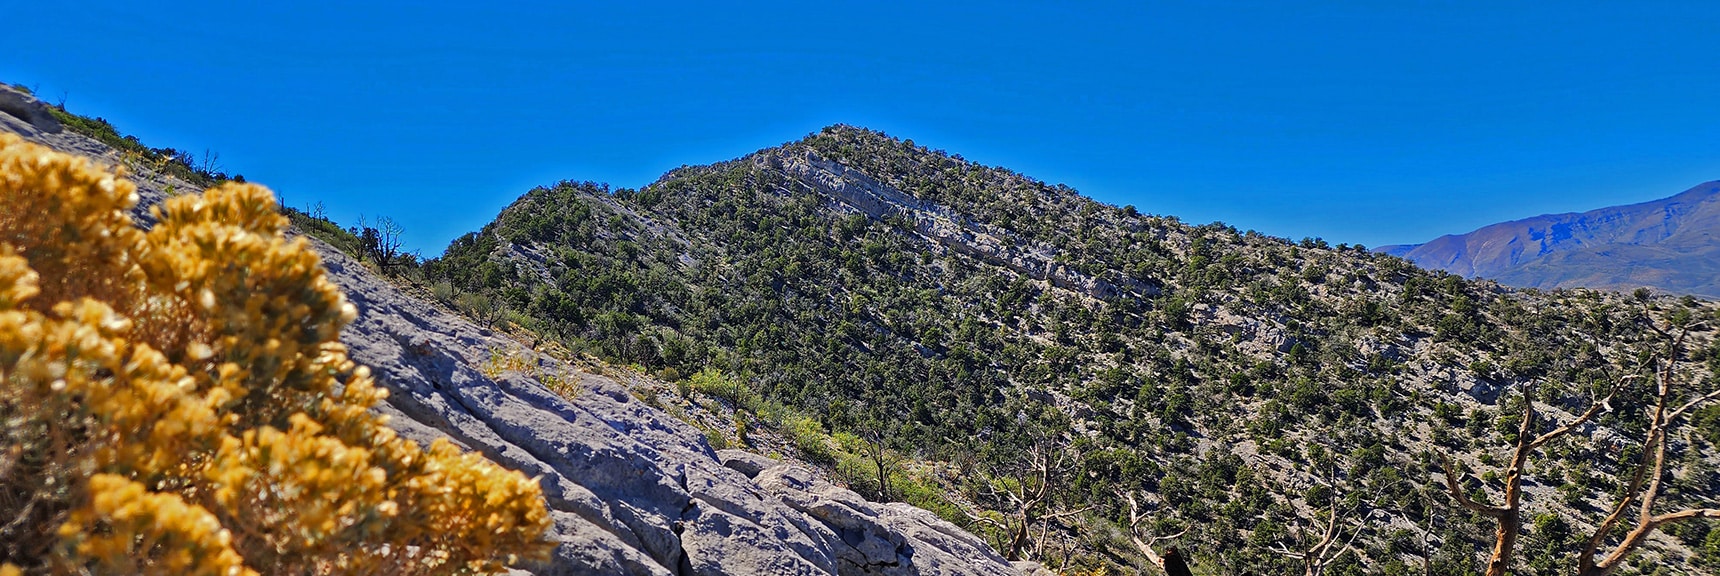 El Bastardo from Burnt Peak Summit | Kyle Canyon Grand Crossing | Northern Half | La Madre Mountains Wilderness, Nevada